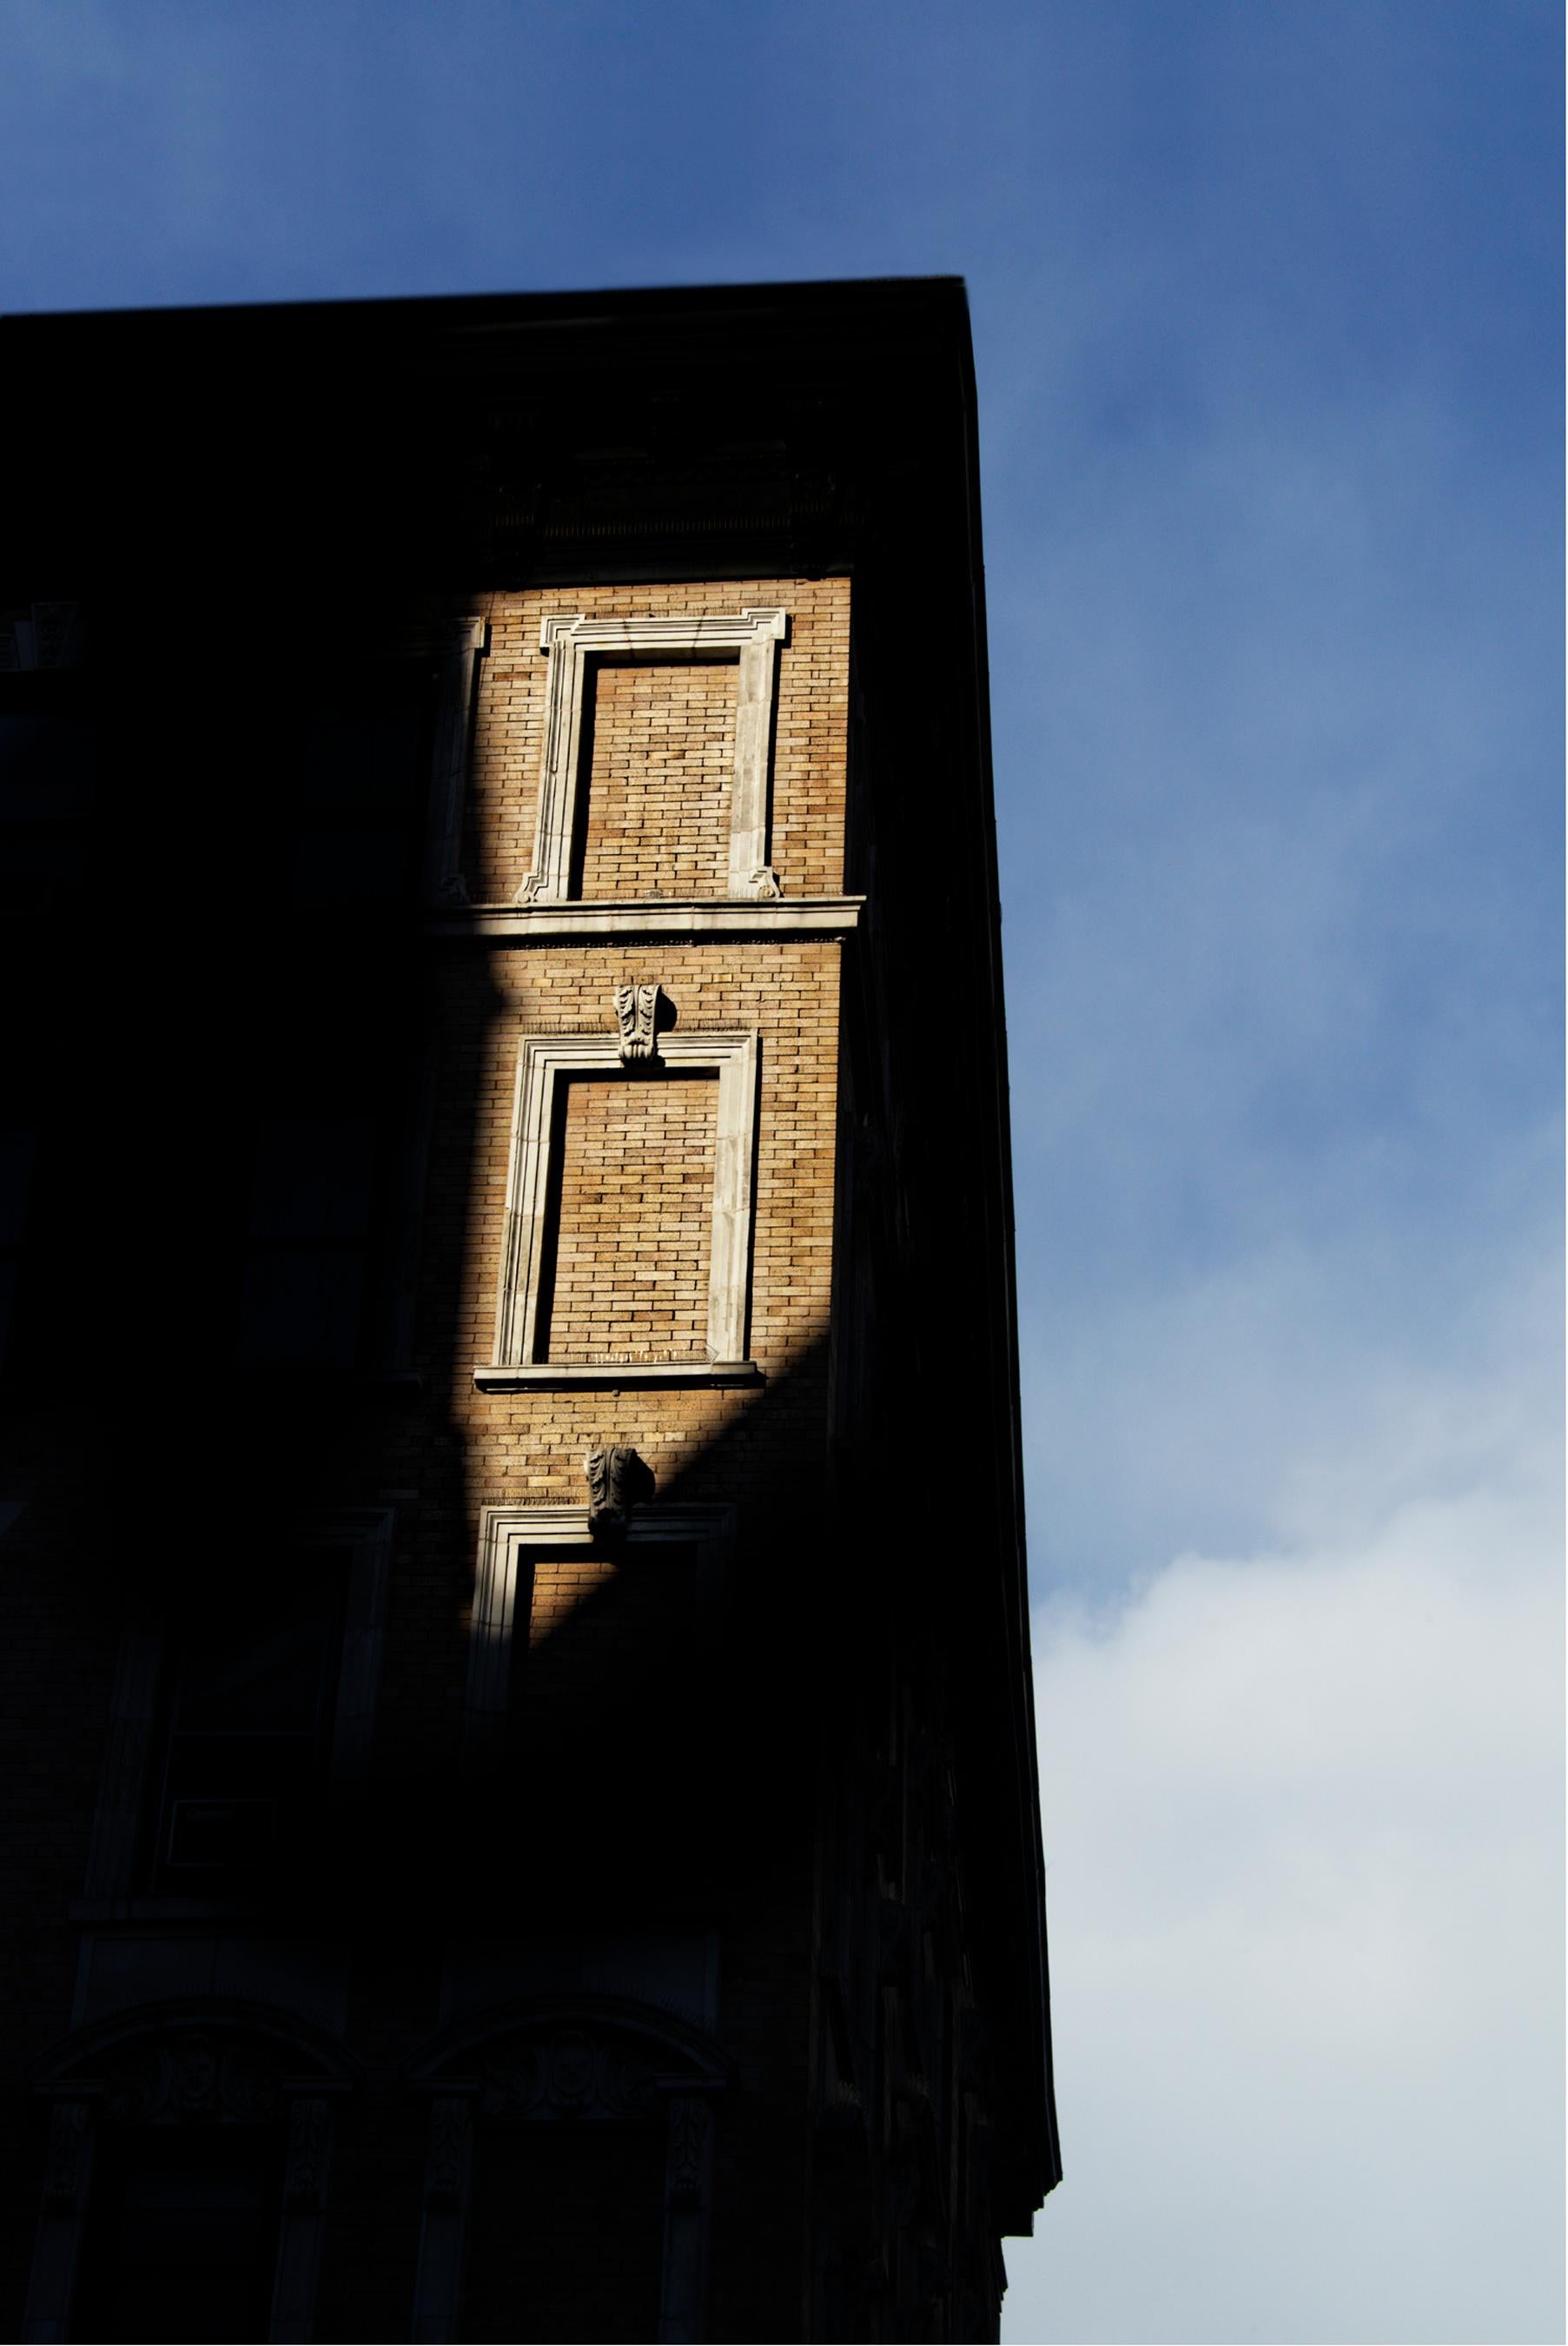 "Closed Windows", photograph, city, architecture, shadow, brick, sky, sunlight